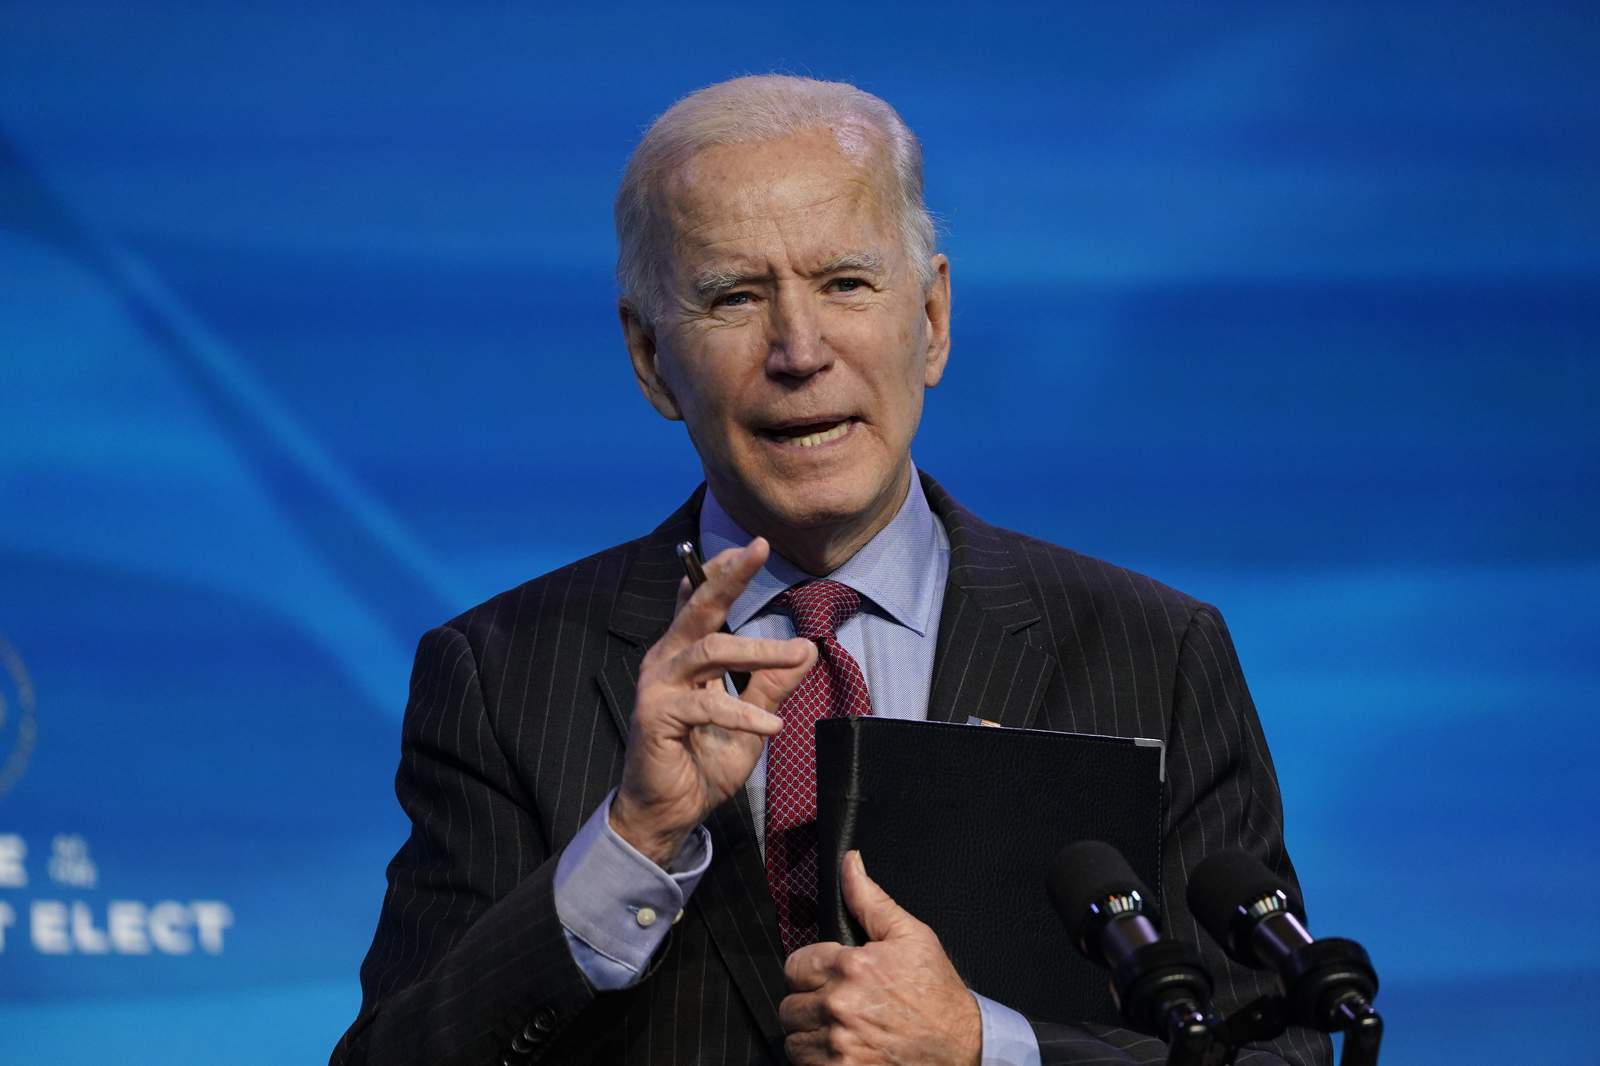 Plunged into virus ‘dark winter,’ Biden must lead US out